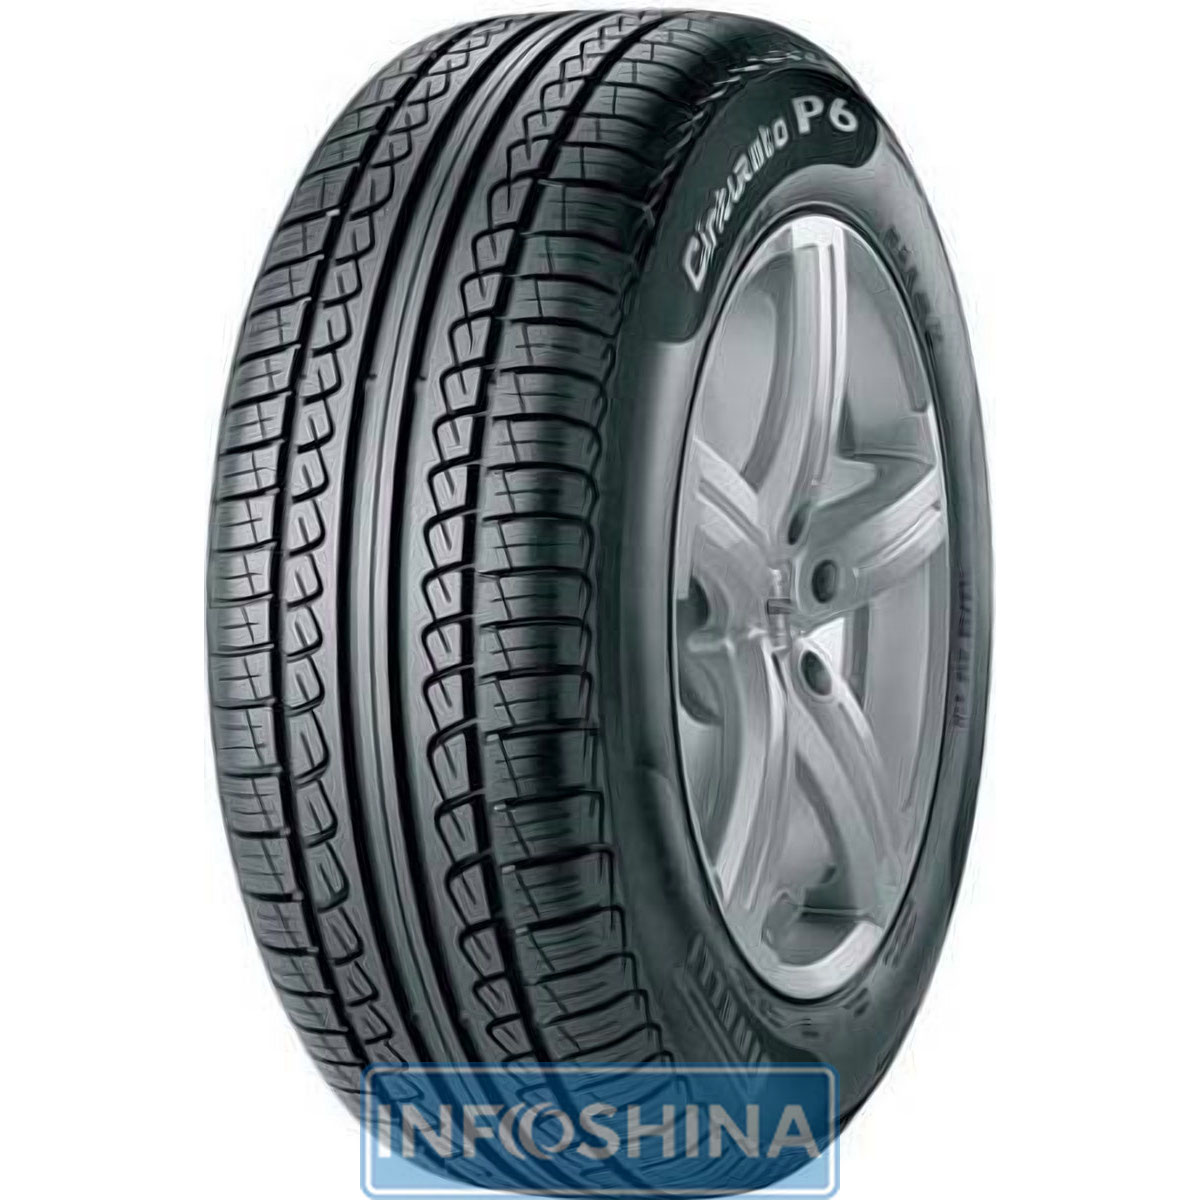 Купить шины Pirelli Cinturato P6 195/60 R15 88H